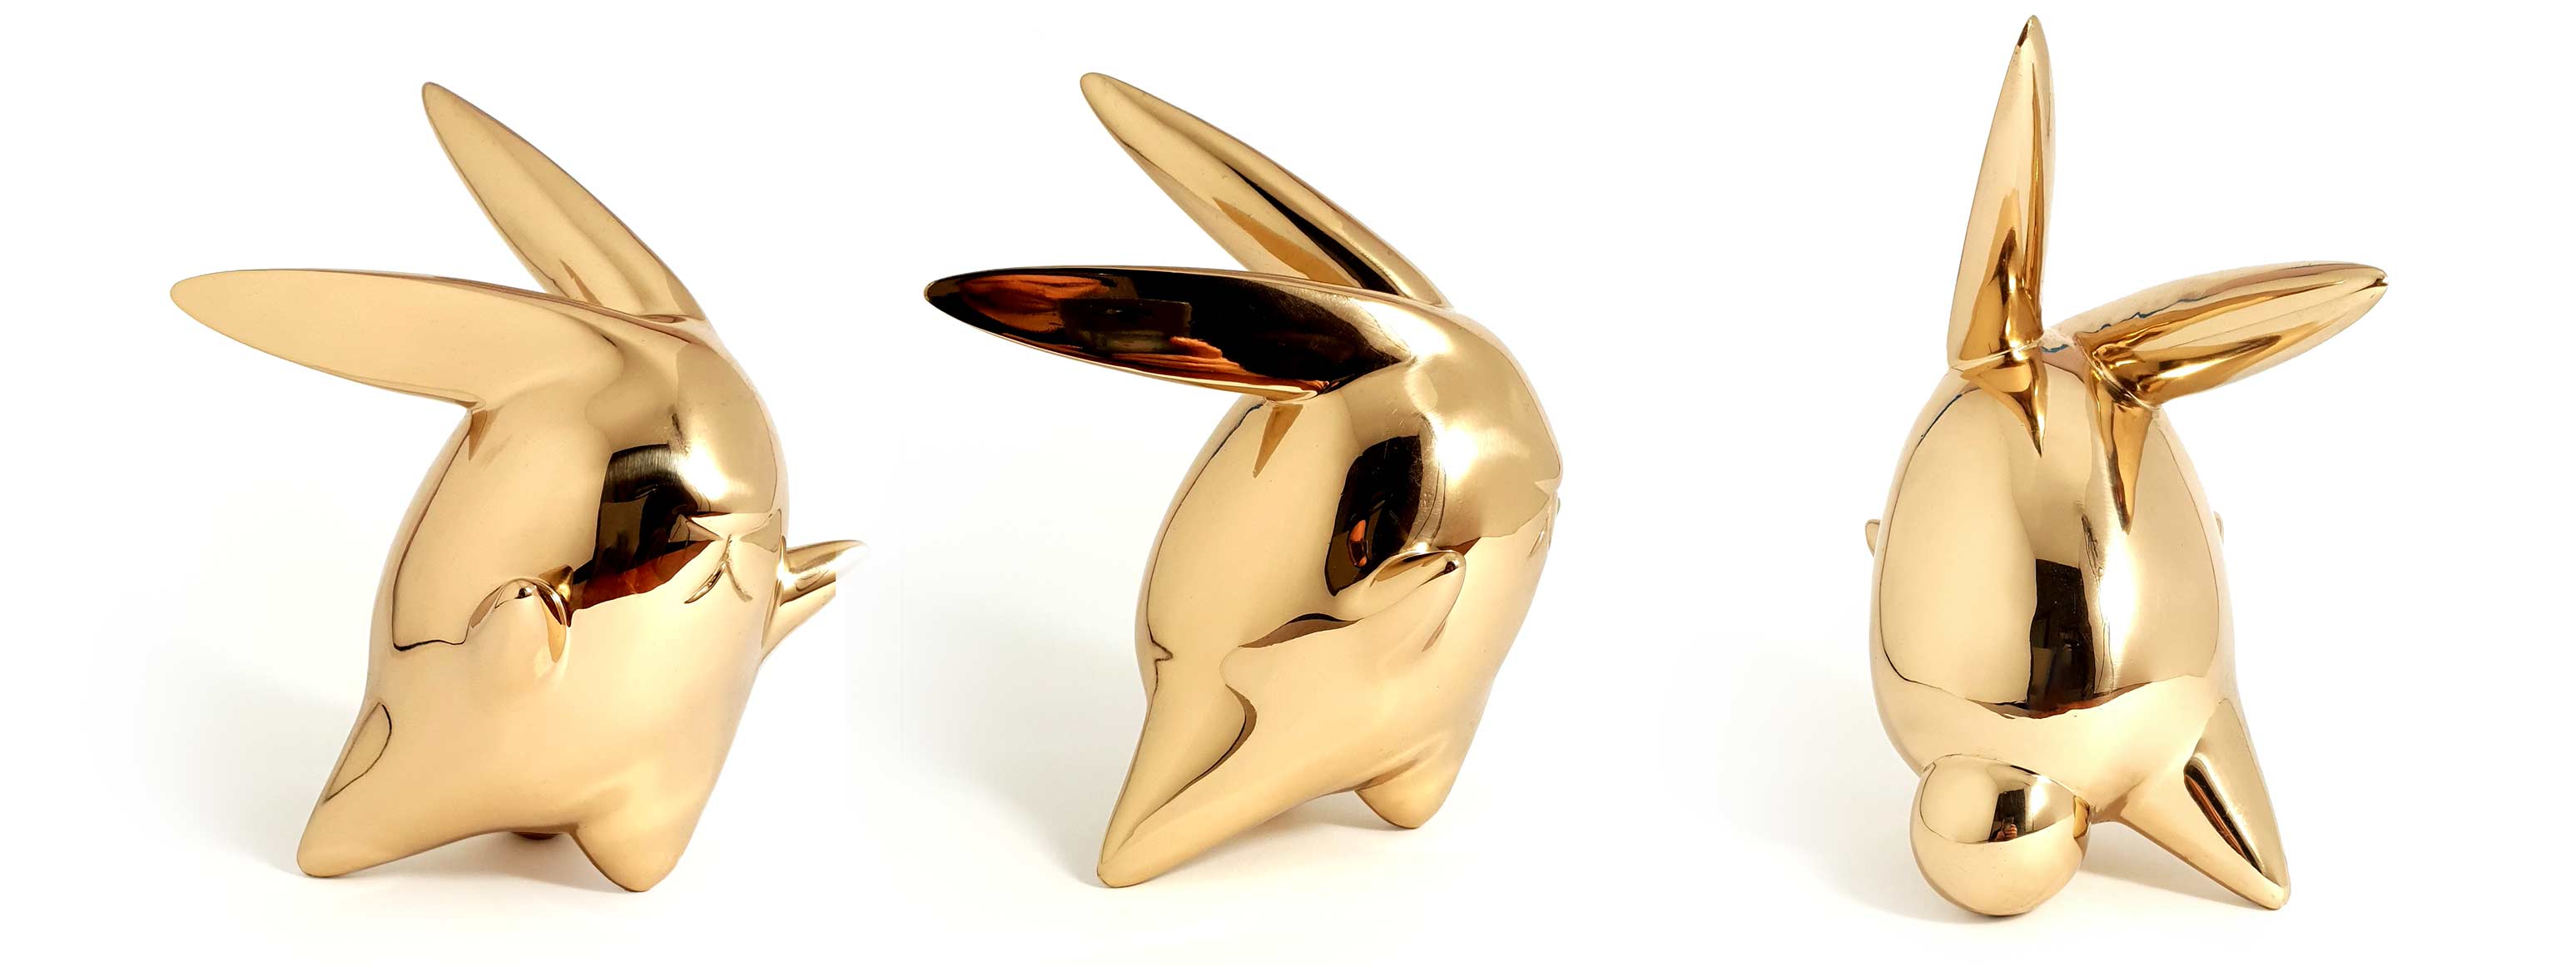 Flight or Fight, bunny rabbit sculpture, gold Mirror Polished Stainless Steel Sculpture, by artist Ferdi B Dick, banner 